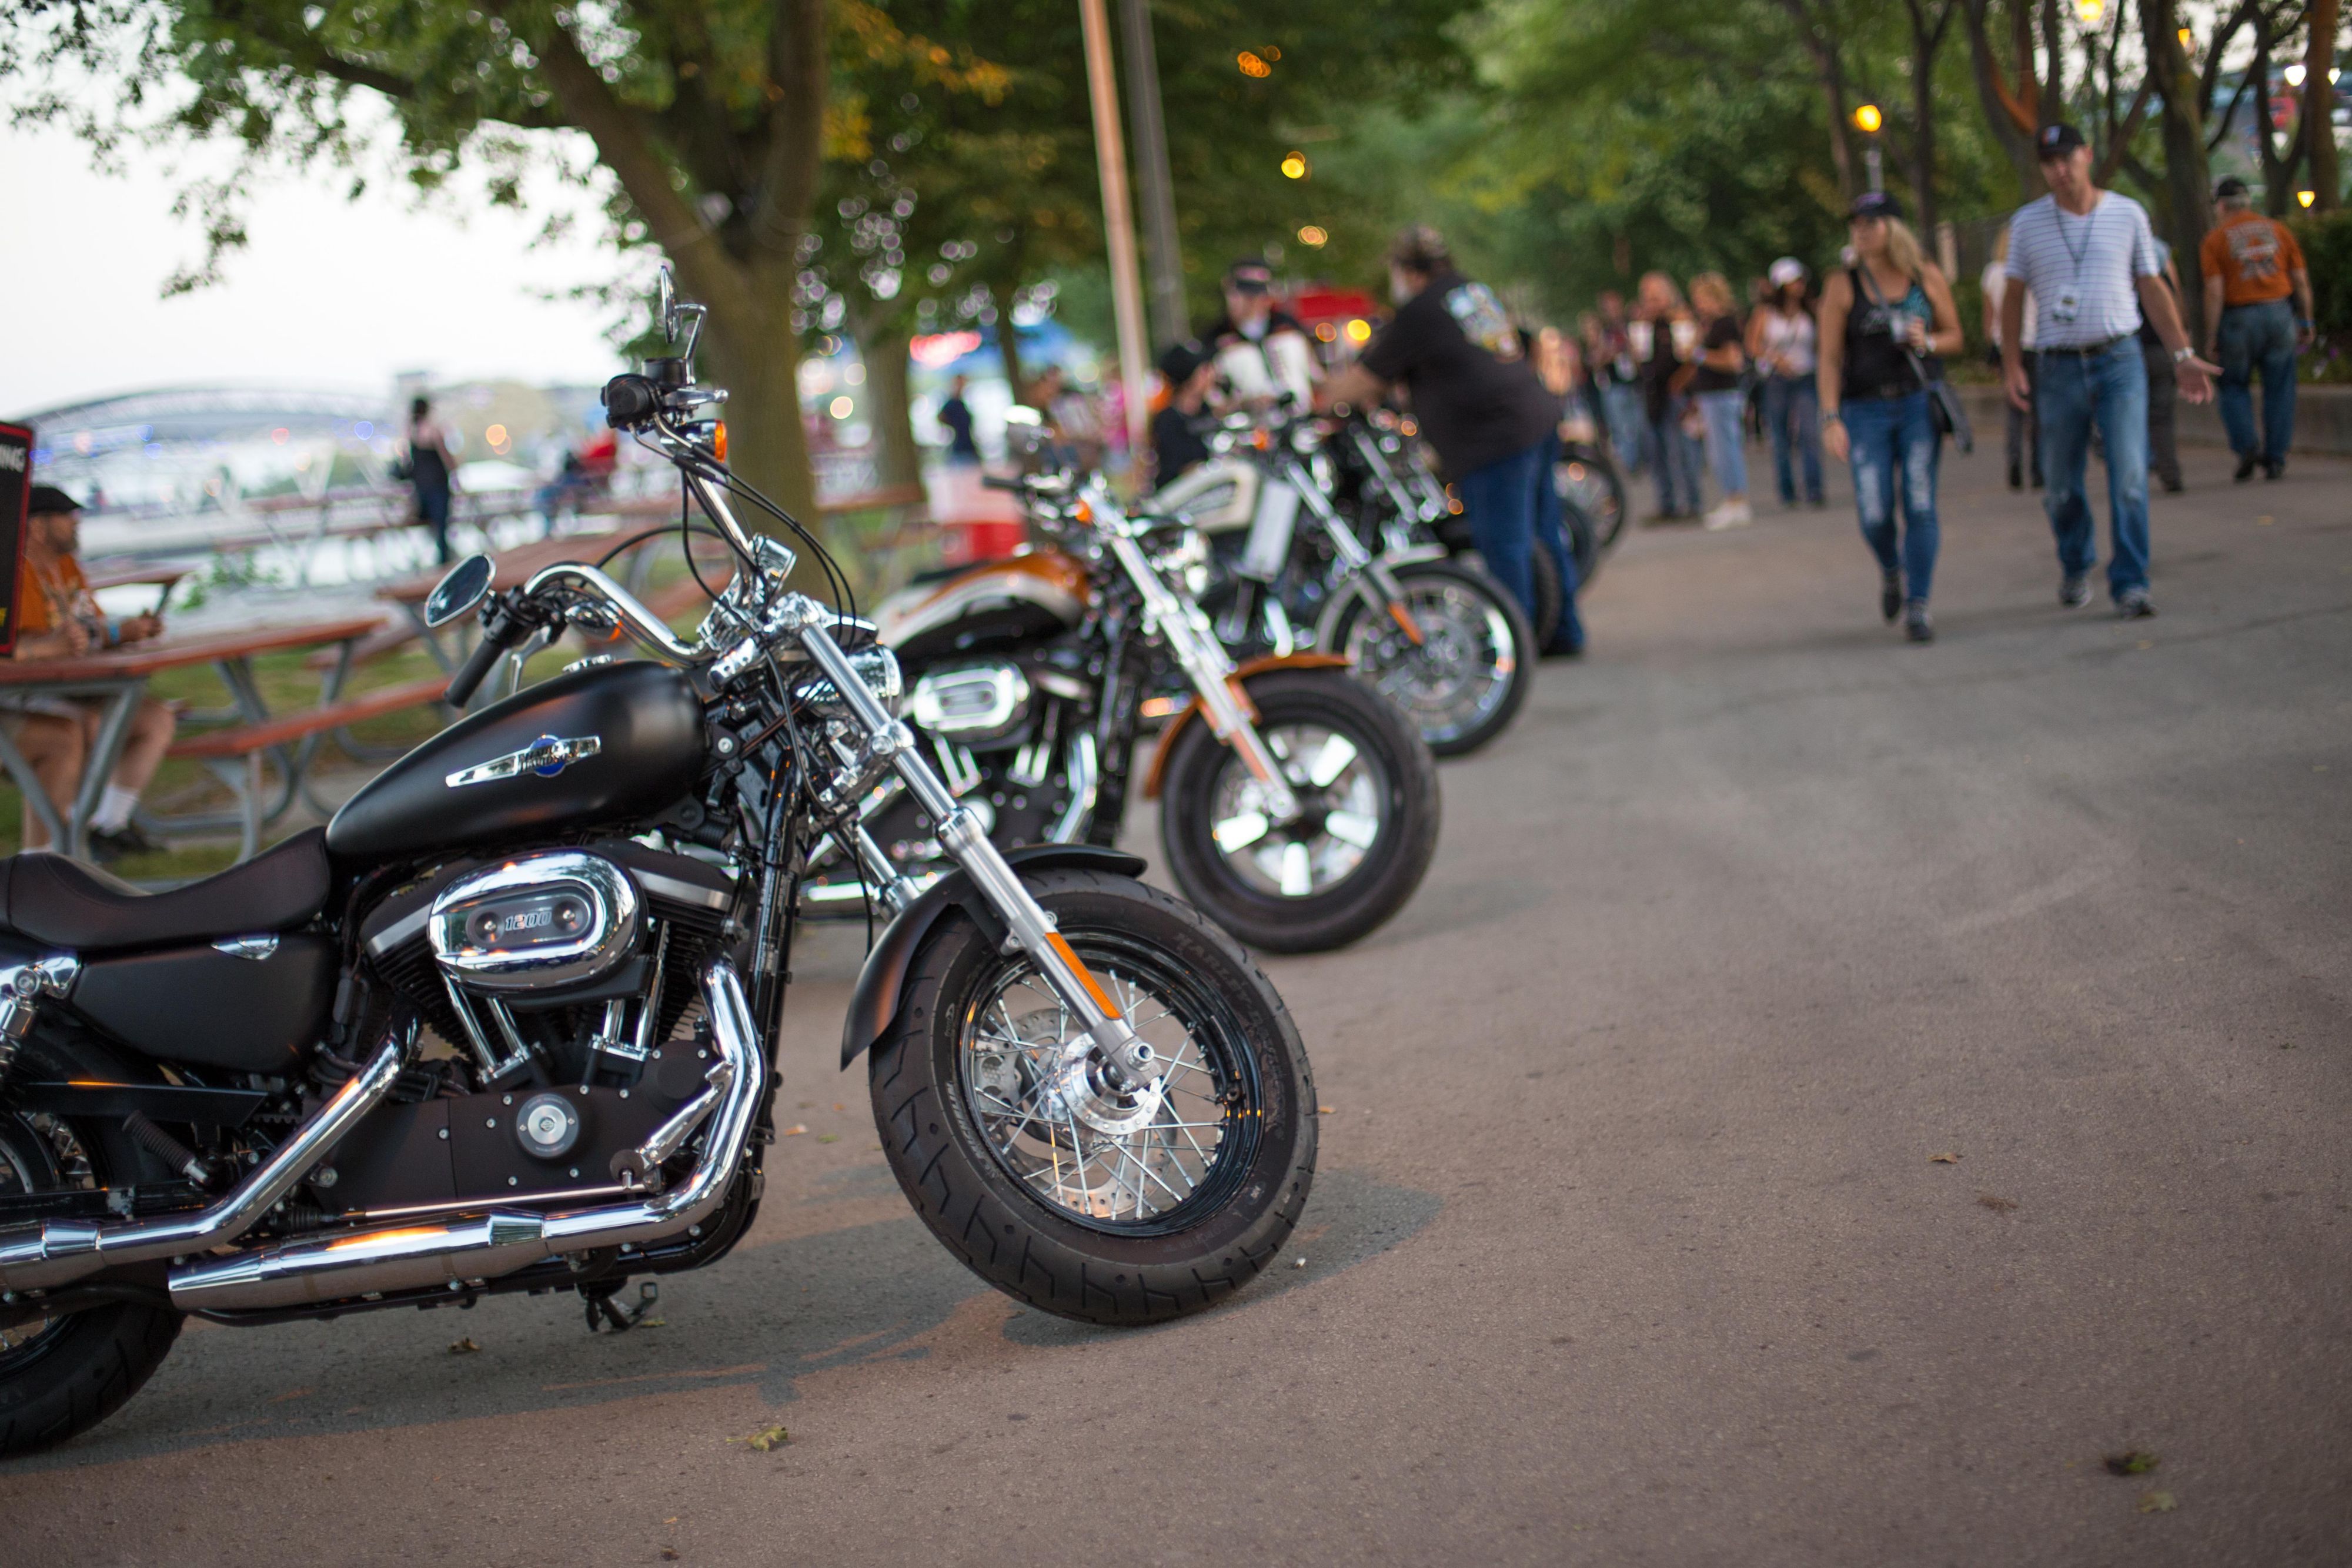 Milwaukee - Home to Harley Davidson!